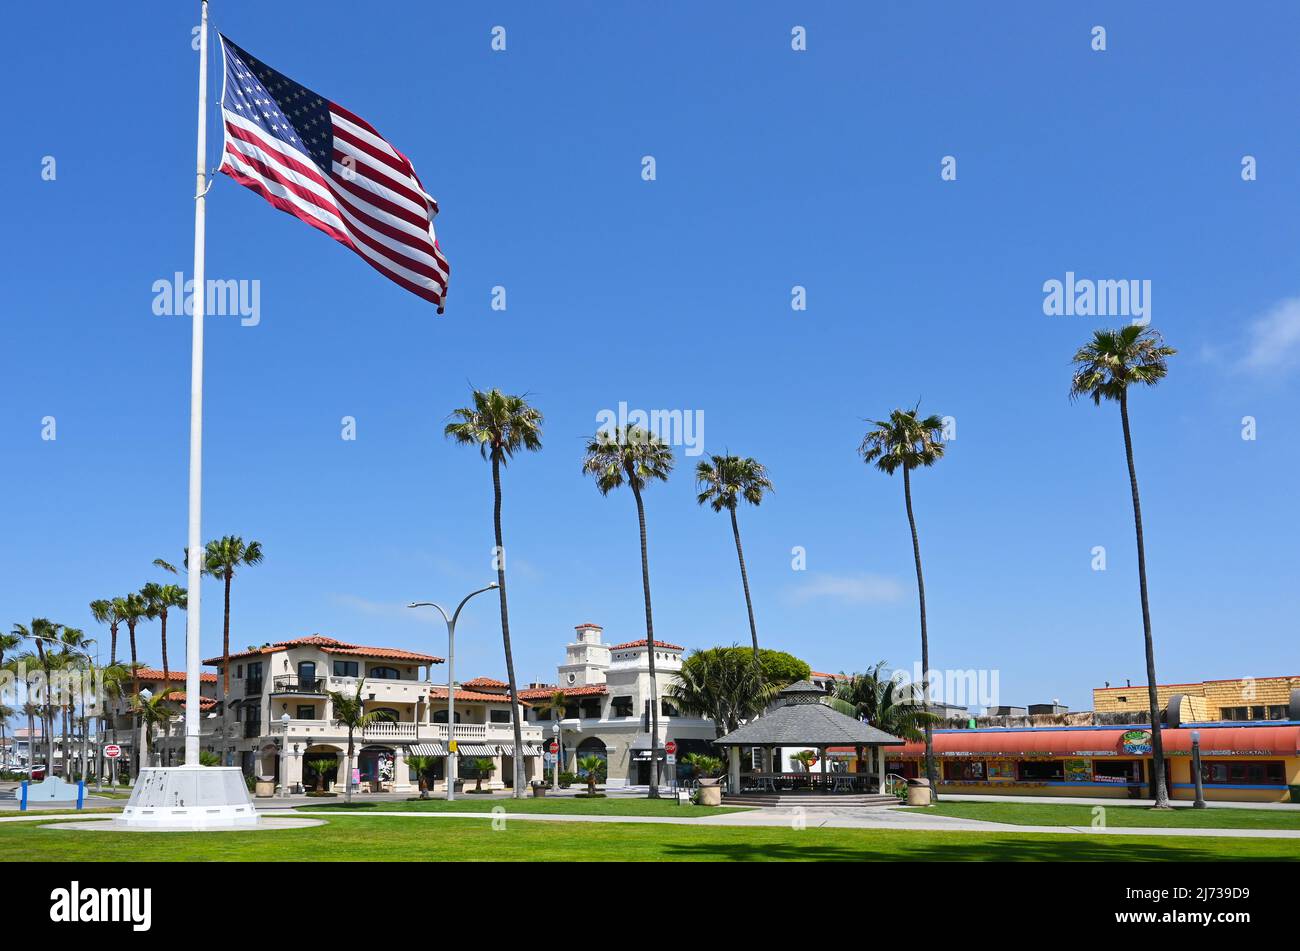 NEWPORT BEACH, CALIFORNIA - 4 MAY 2022: Peninsula Park with restaurants and shops at Main Street and the Balboa Pier. Stock Photo